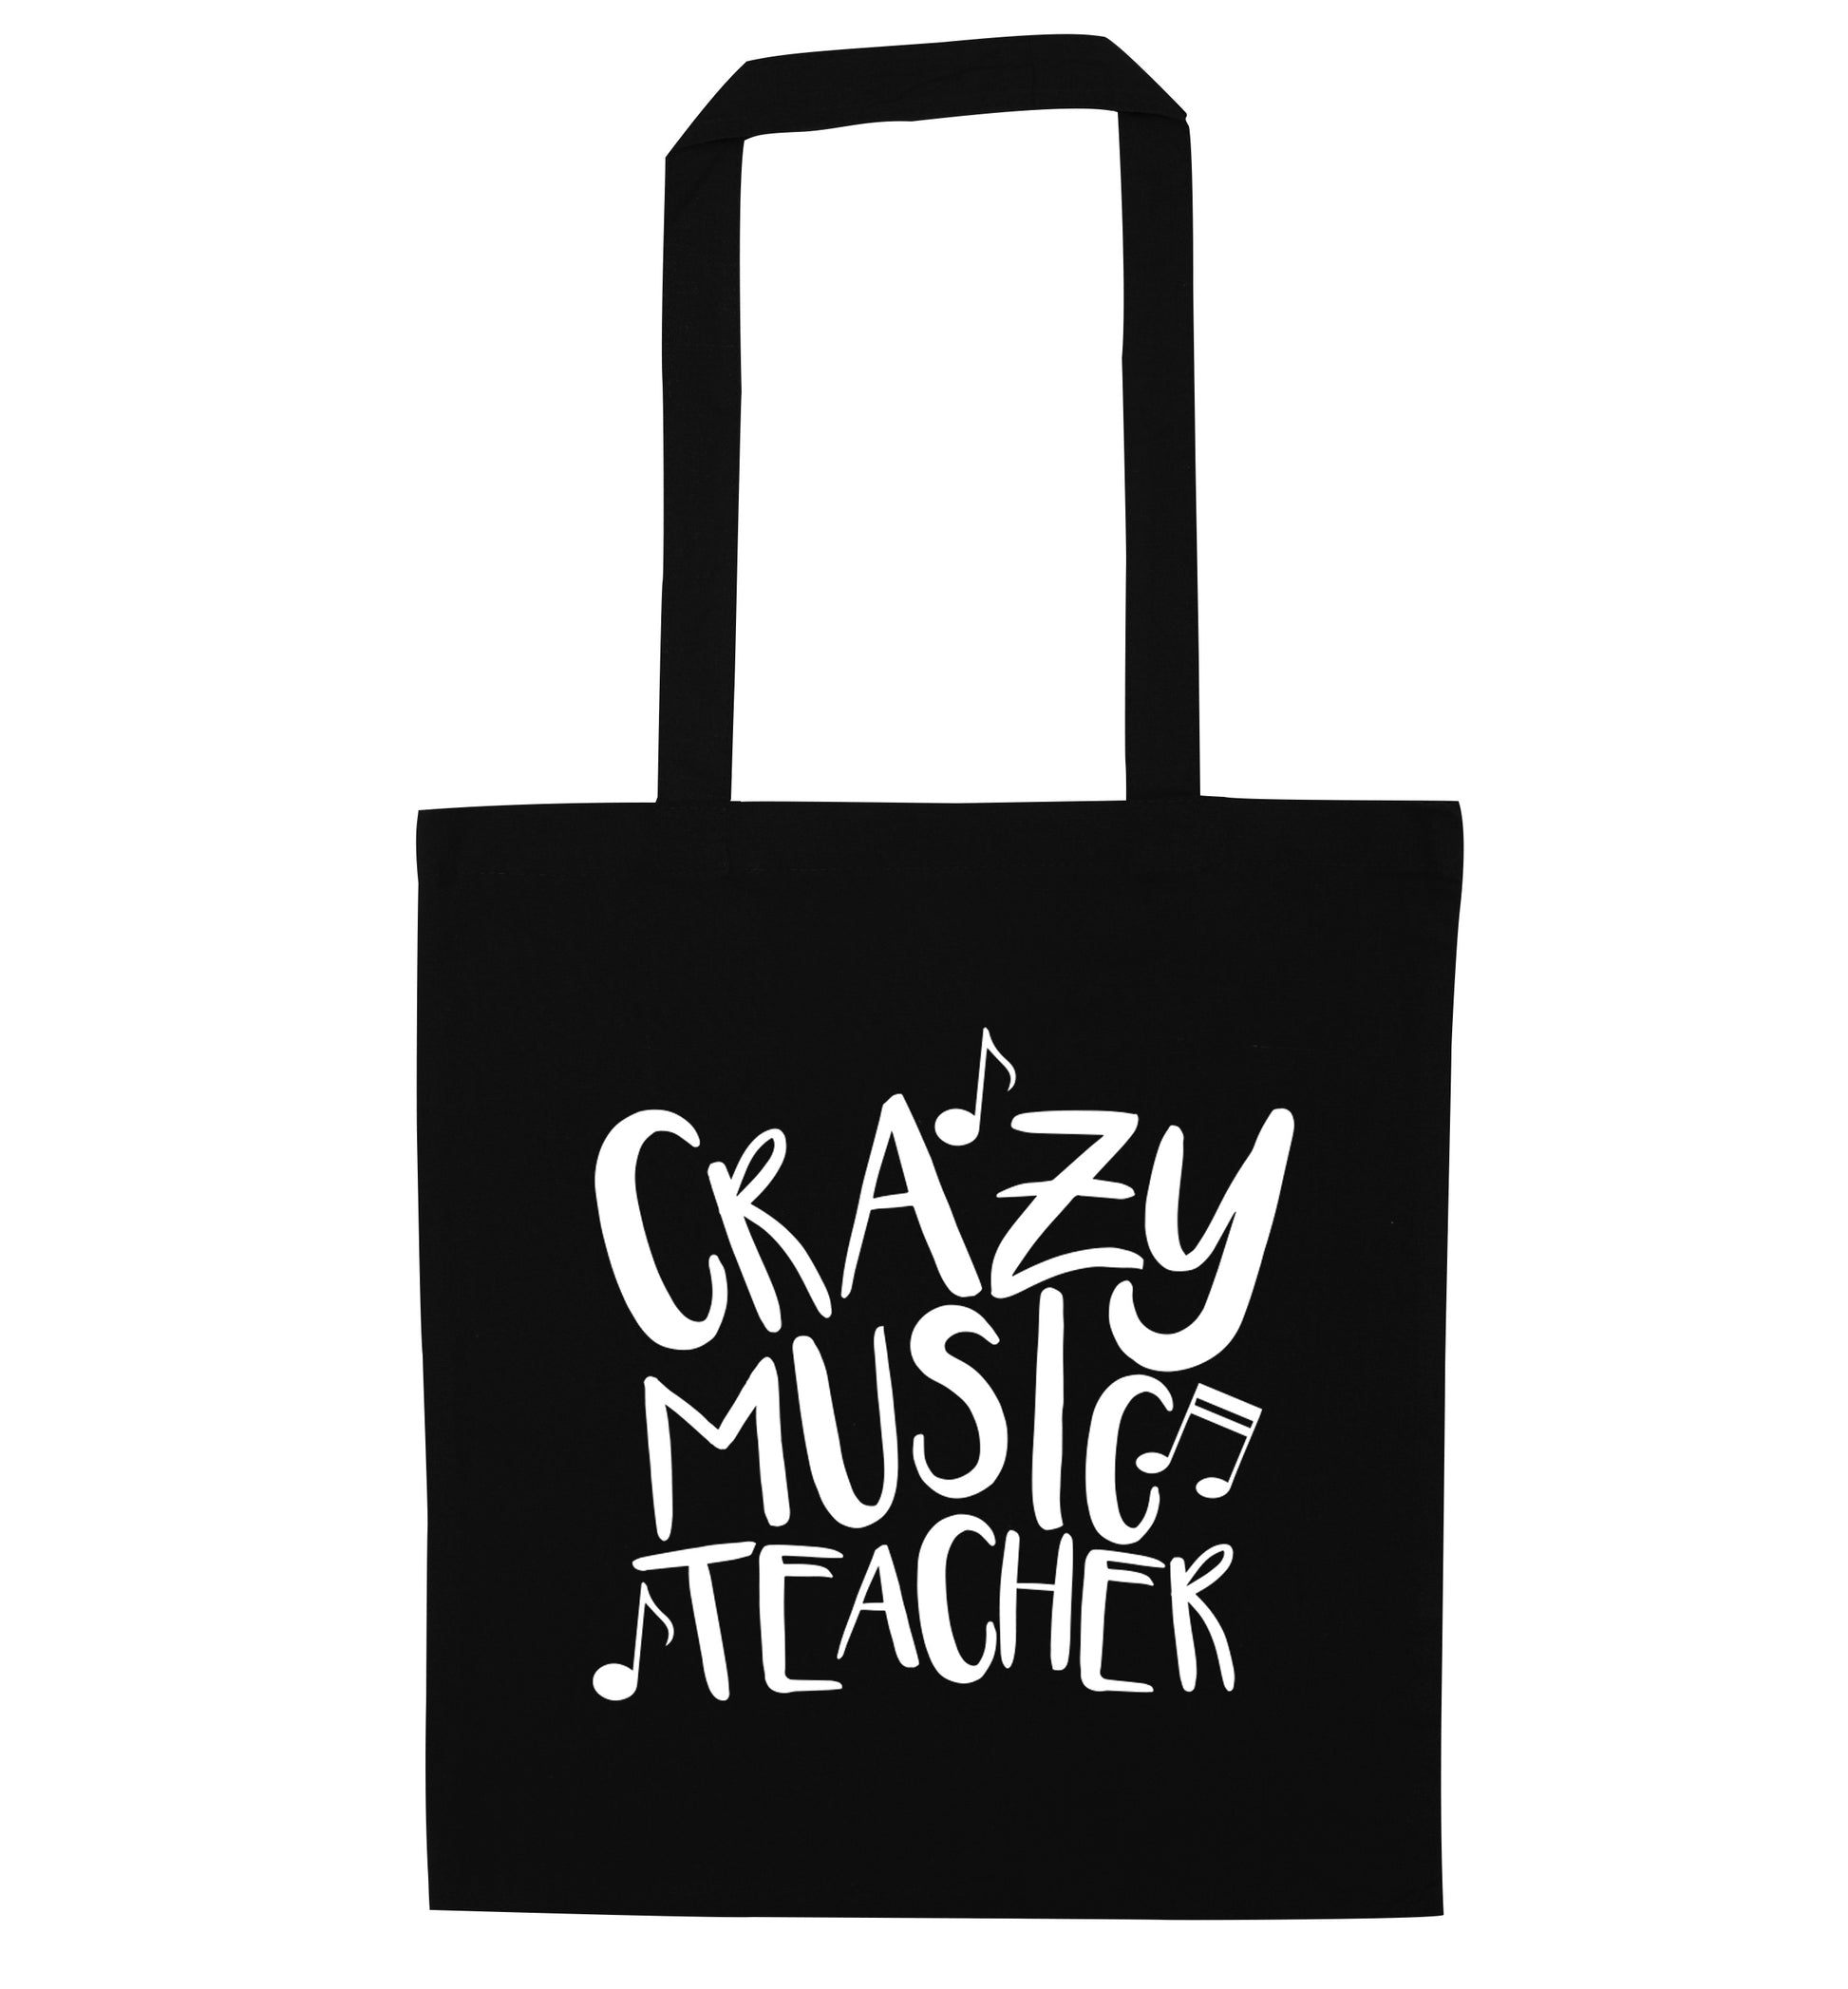 Crazy music teacher black tote bag